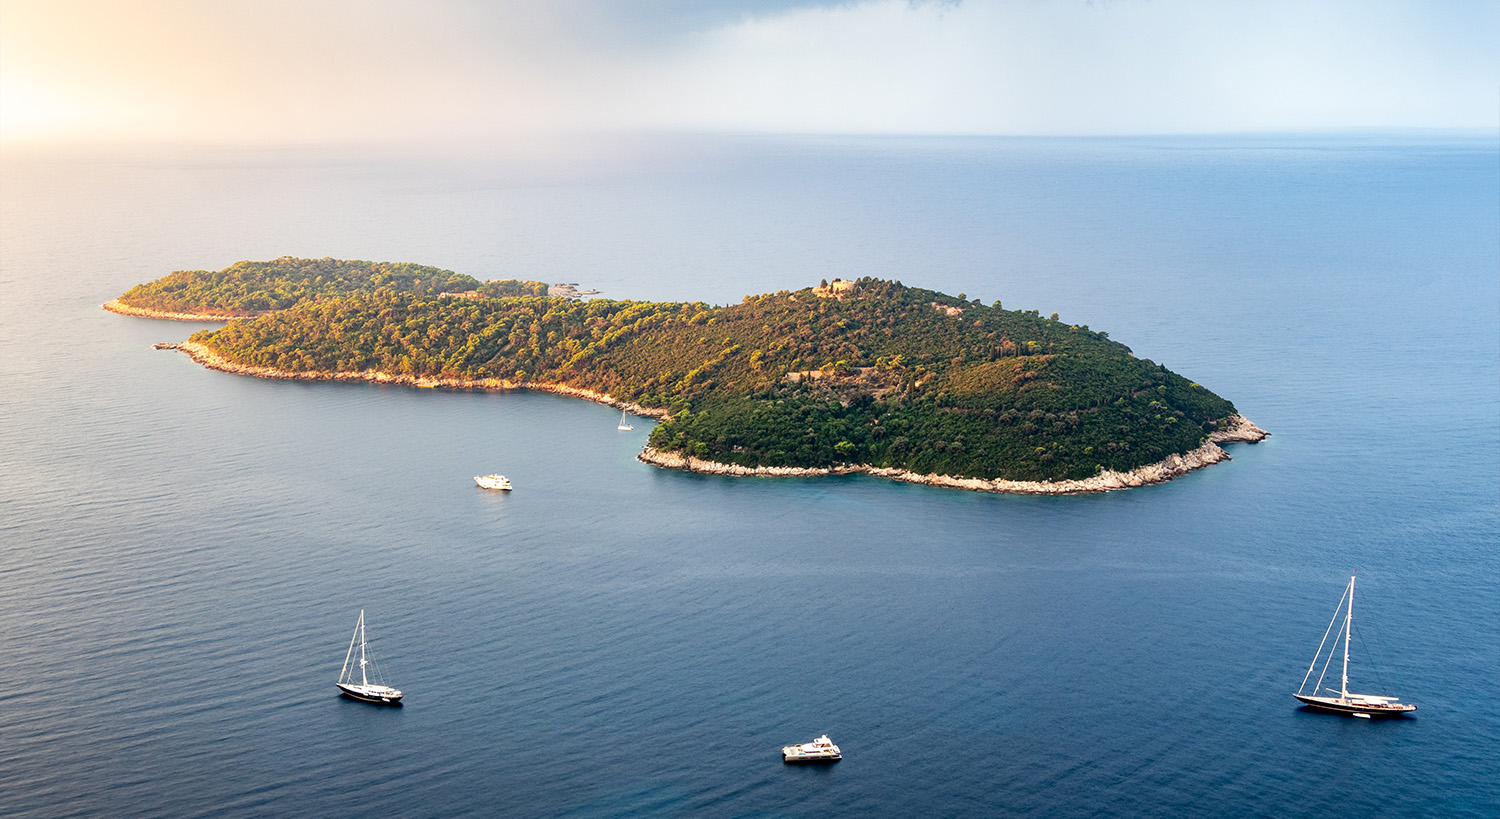 Sailing boats around a small island in Croatia